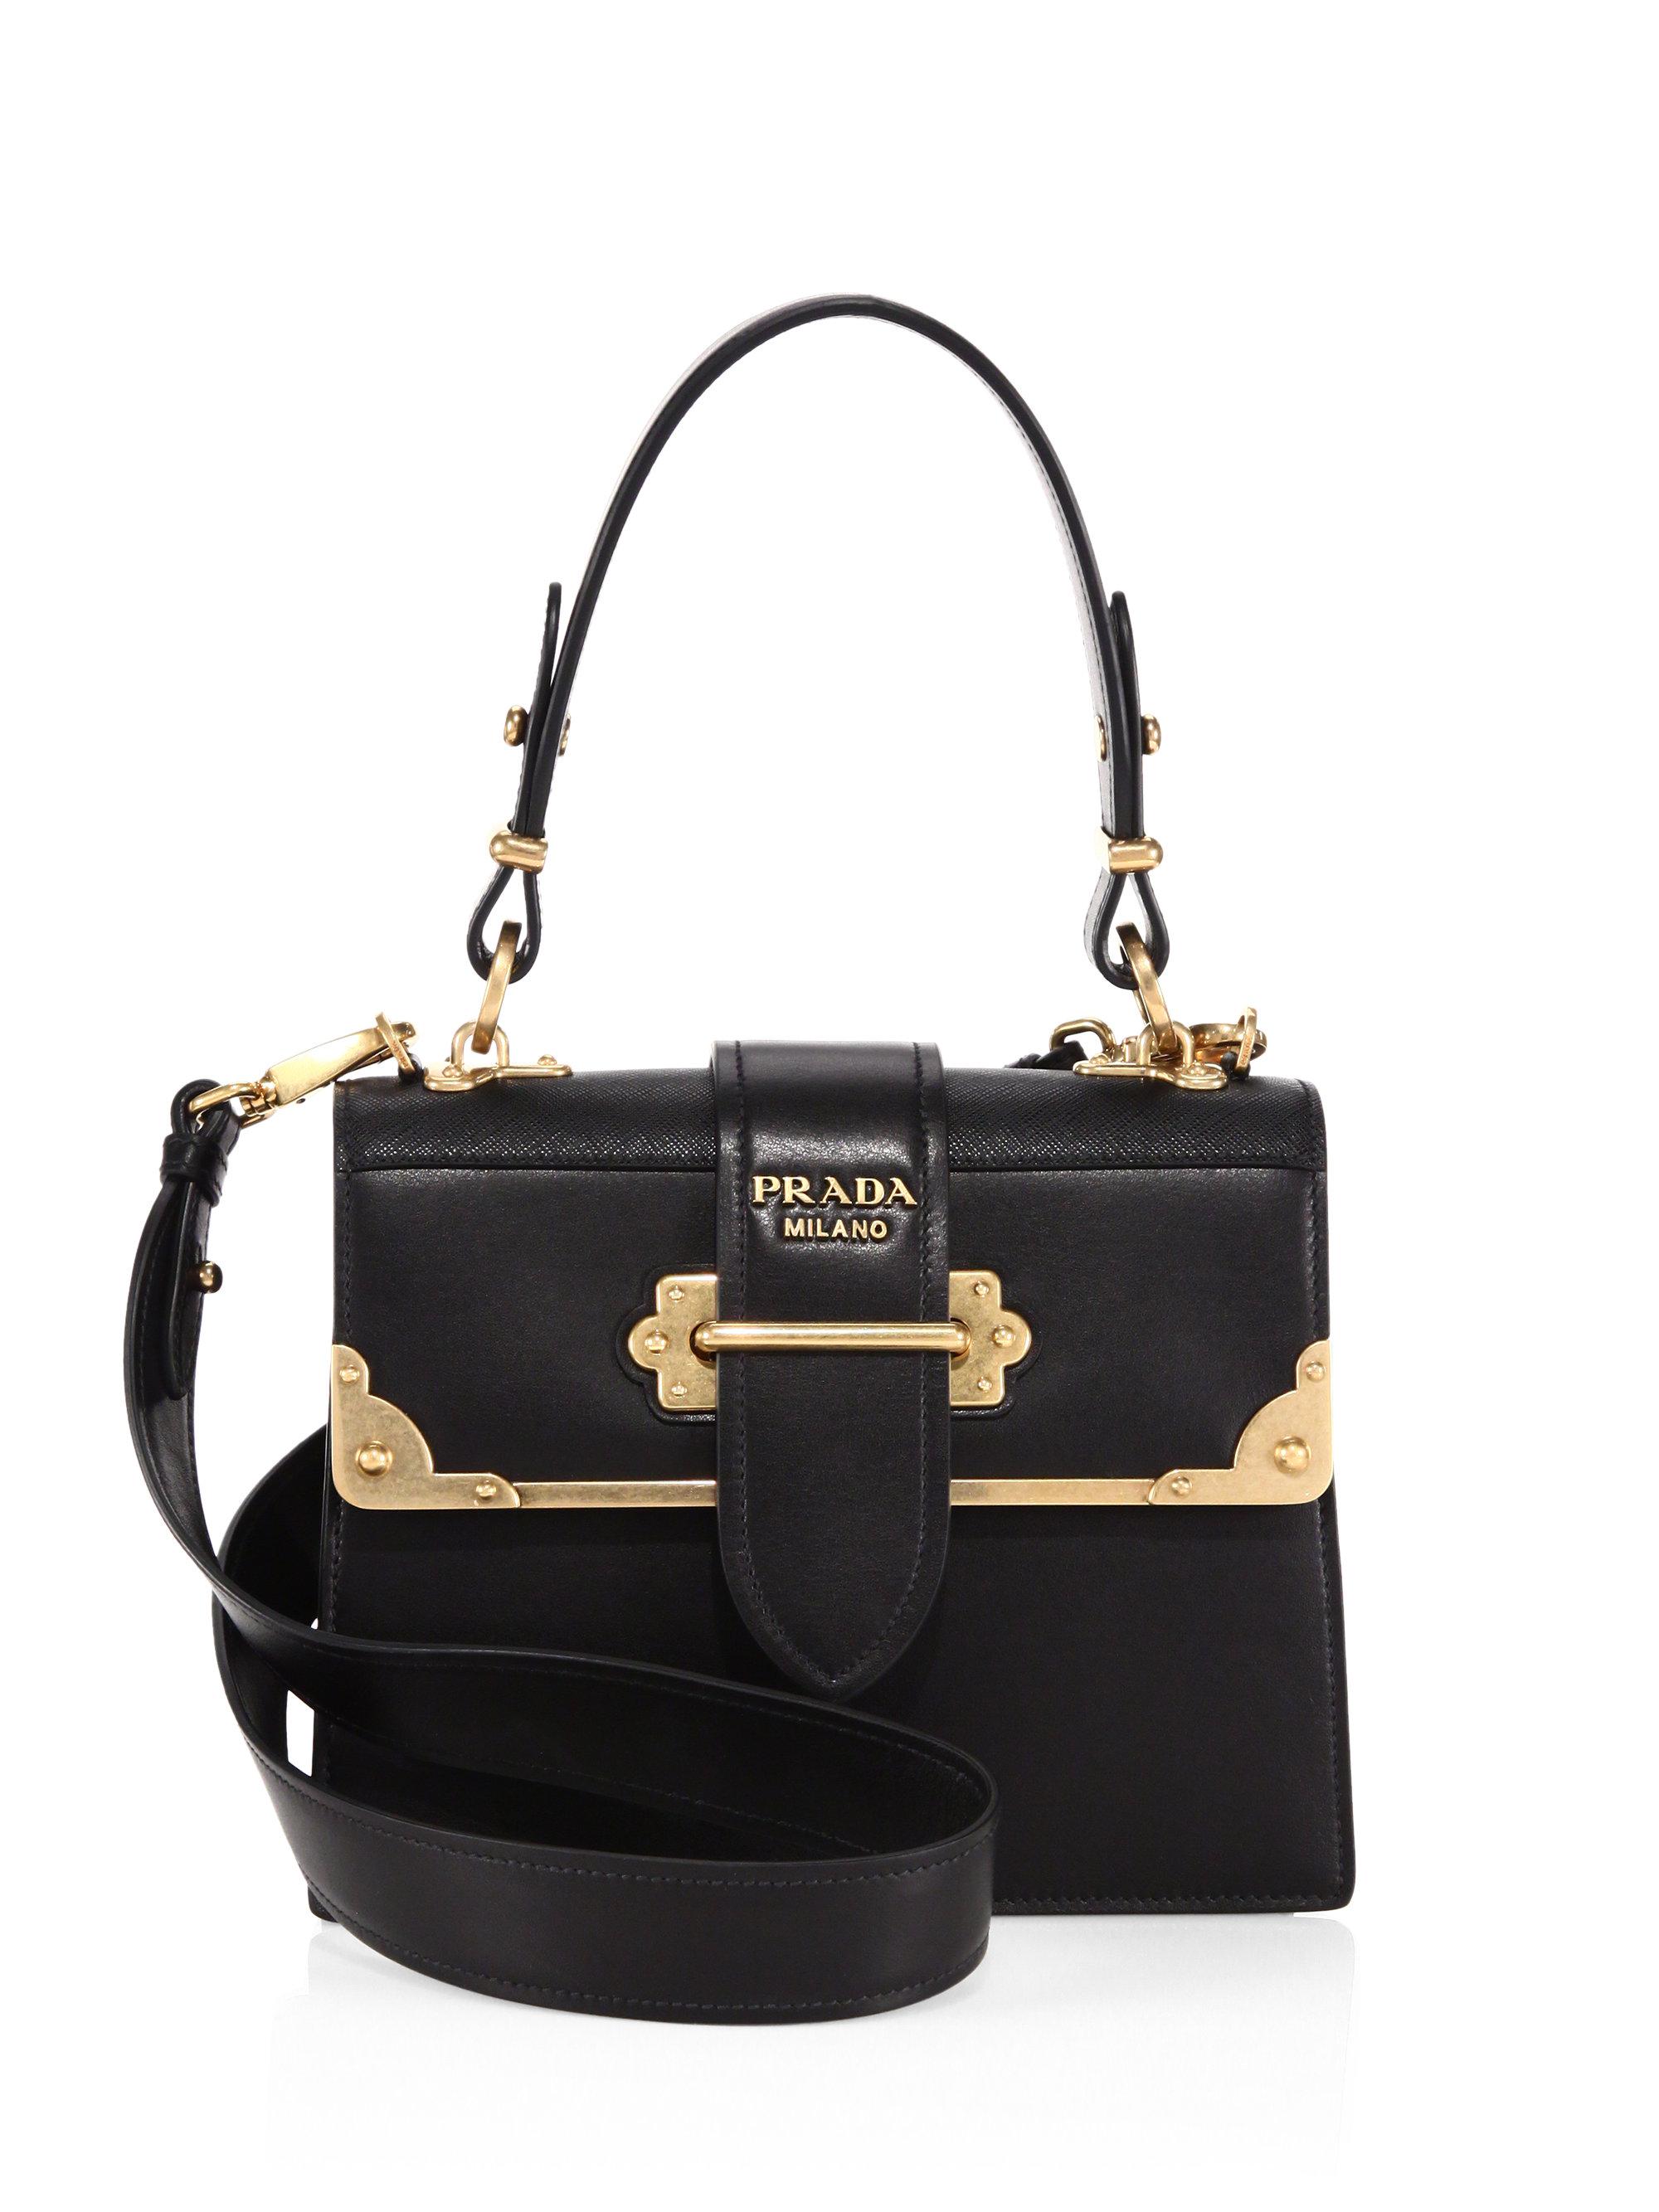 Saks Fifth Avenue Prada Handbags Clearance, 54% OFF 